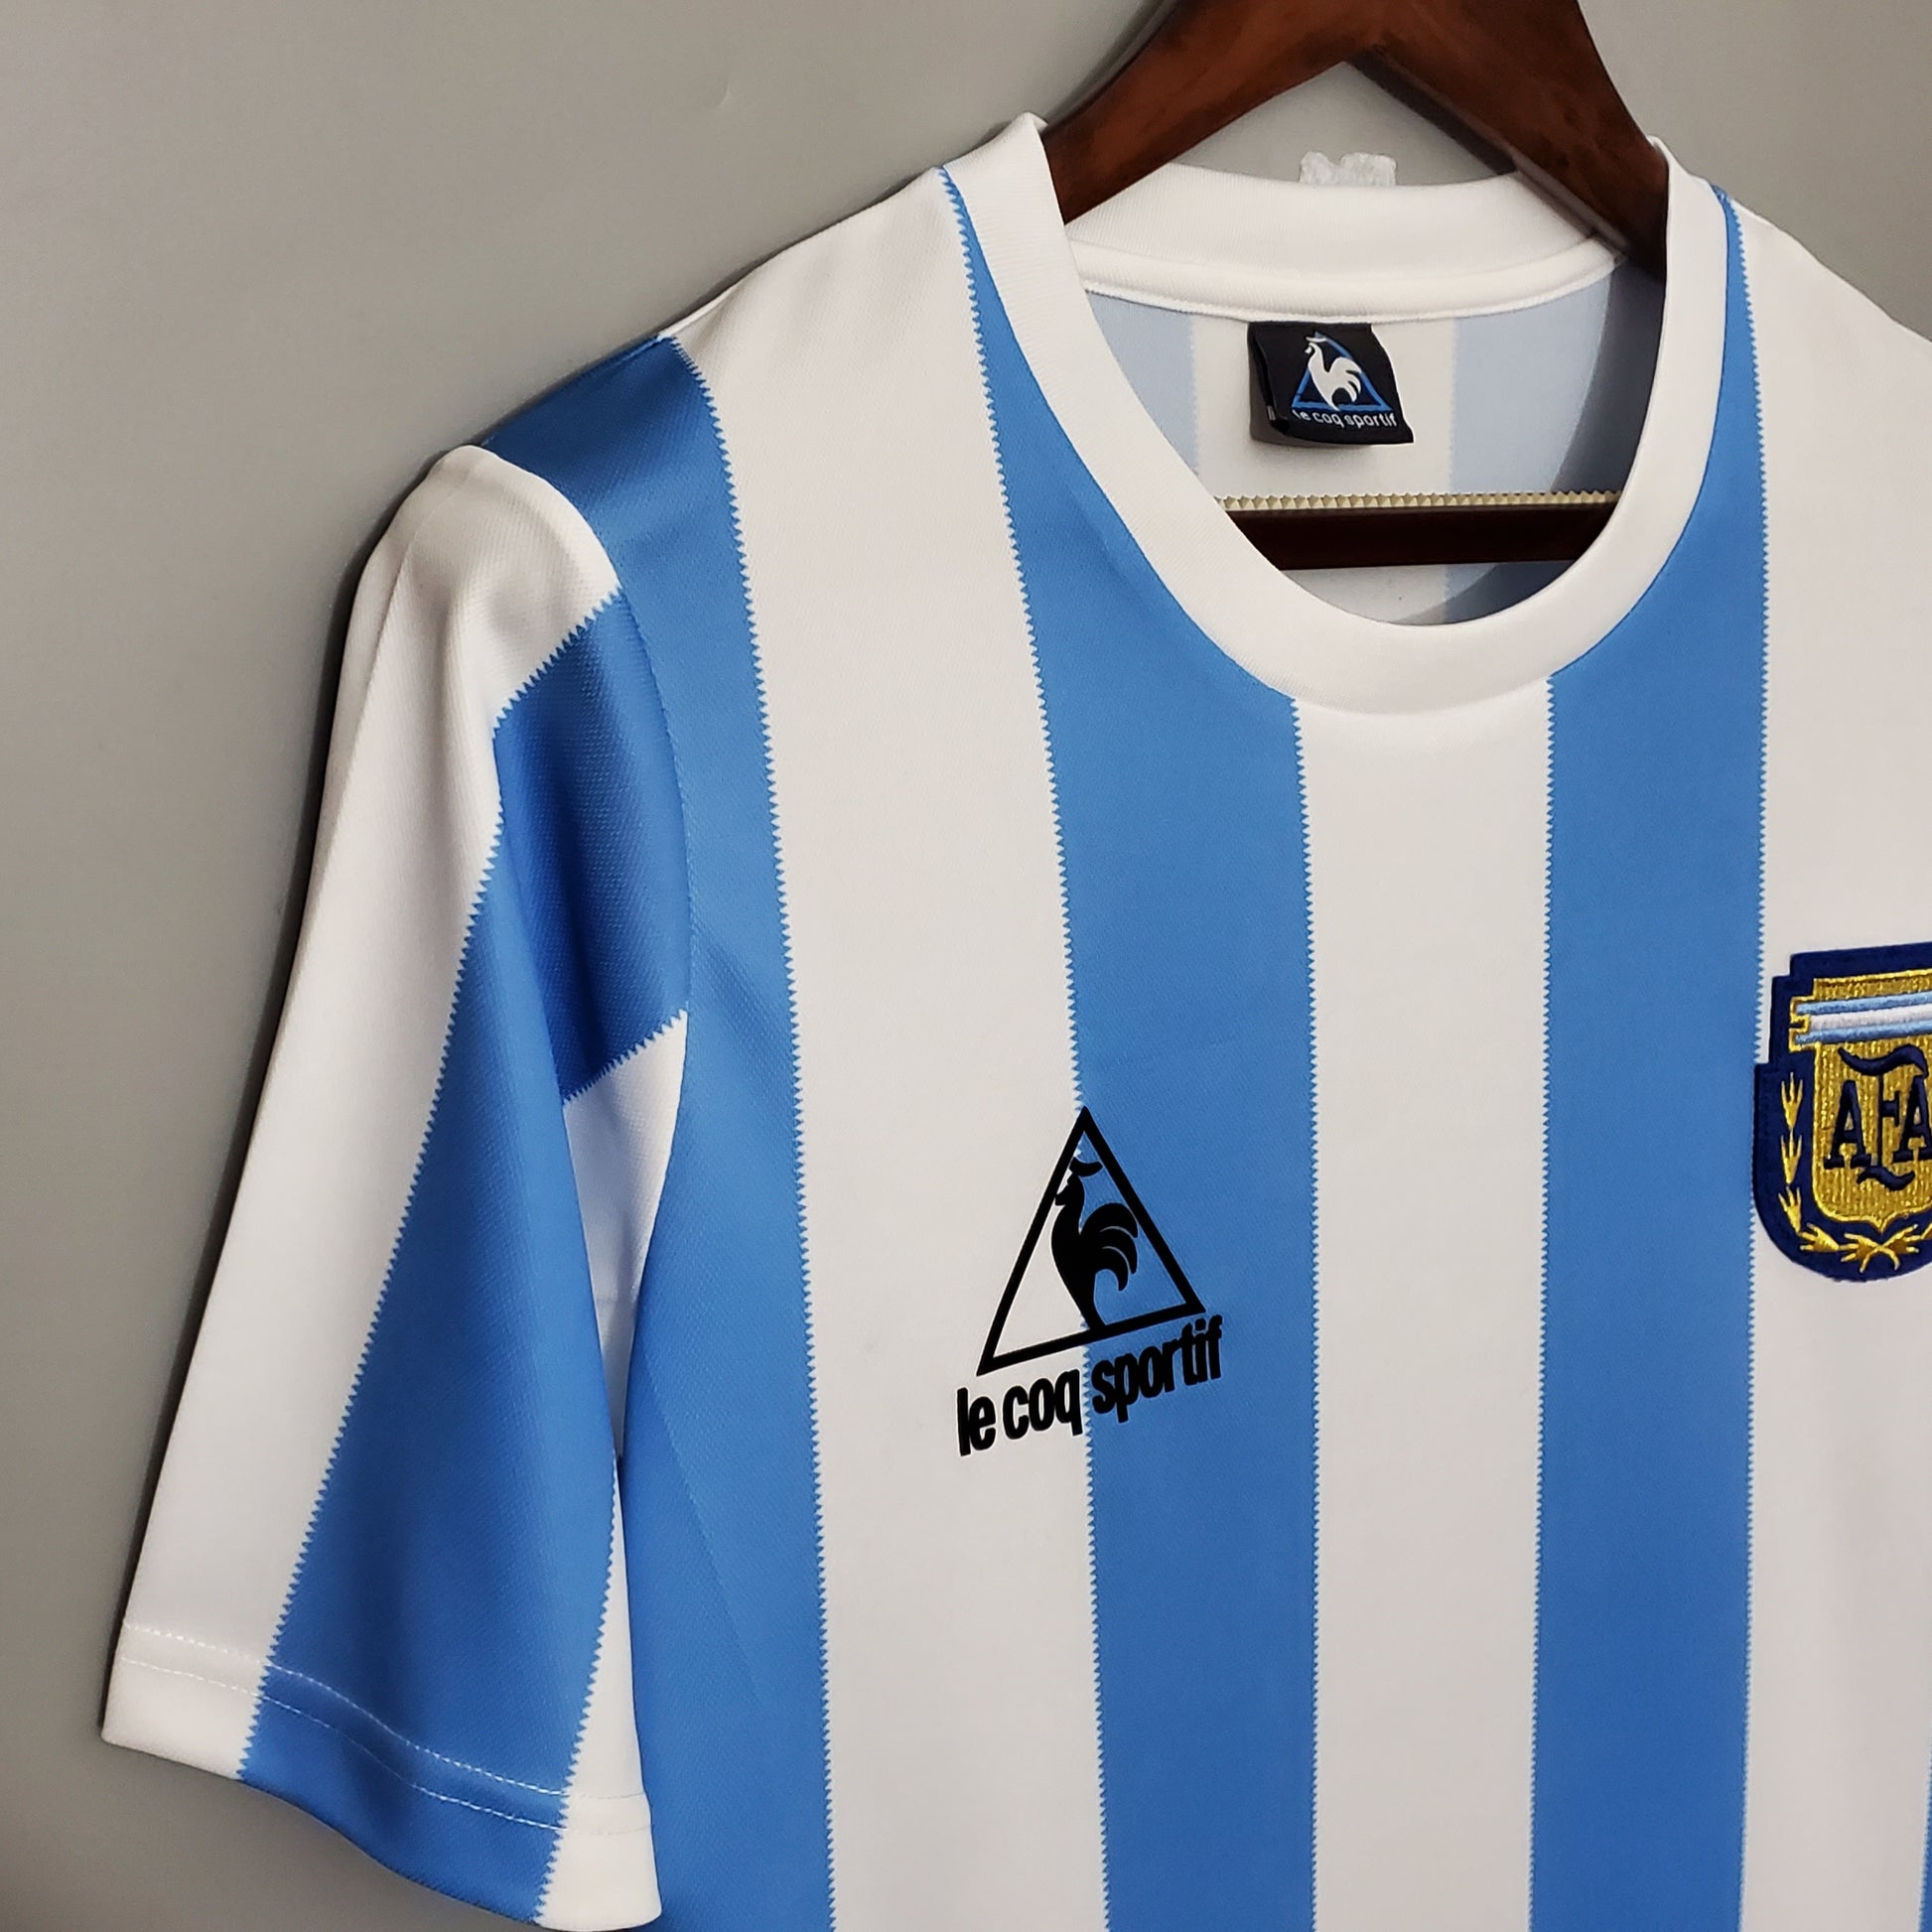 Retro Argentina Shirt 1986,Argentina Football Kit 1986,S-XL 1986 Argentina  Home retro jerseys 1986 Argentina home Vintage jerse